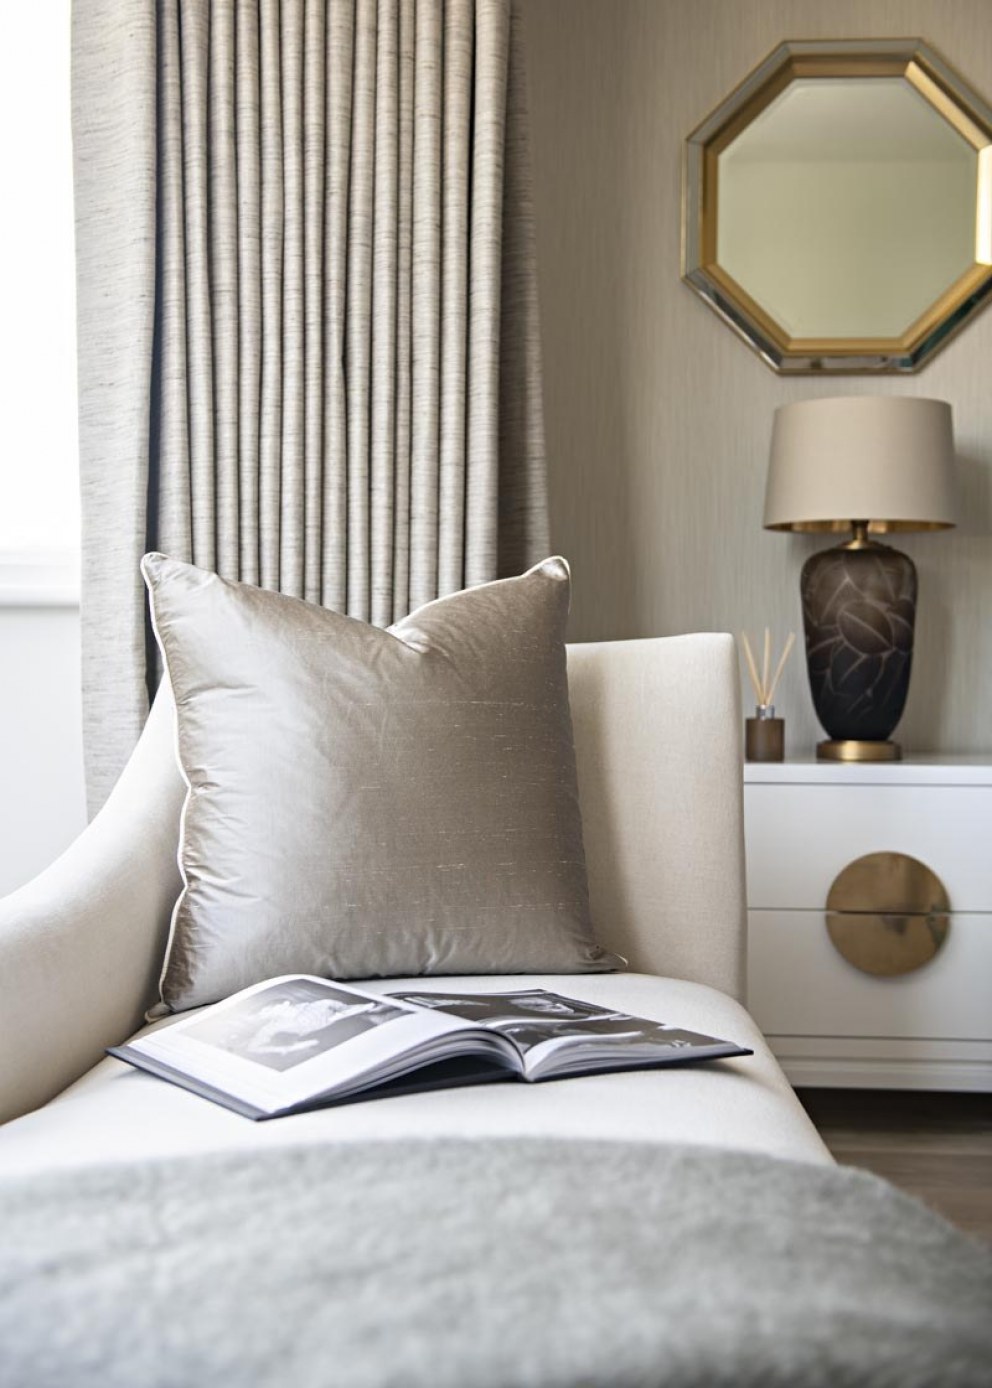 Kensington luxury family home | Master Bedroom 2 | Interior Designers